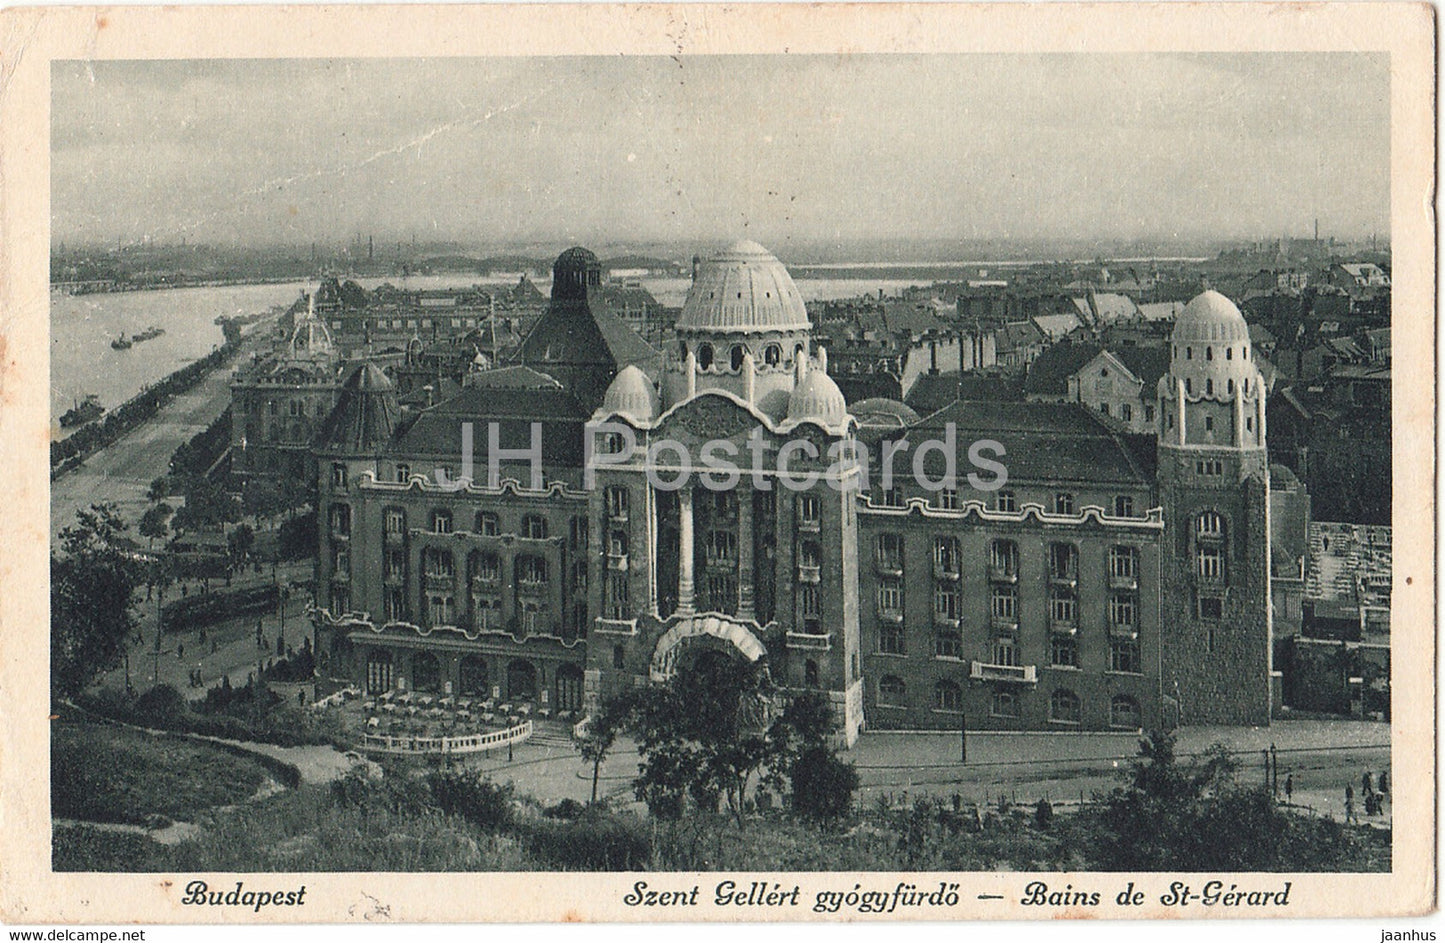 Budapest - Szent Gellert gyogyfurdo - Bains de St Gerard - old postcard - Hungary - used - JH Postcards